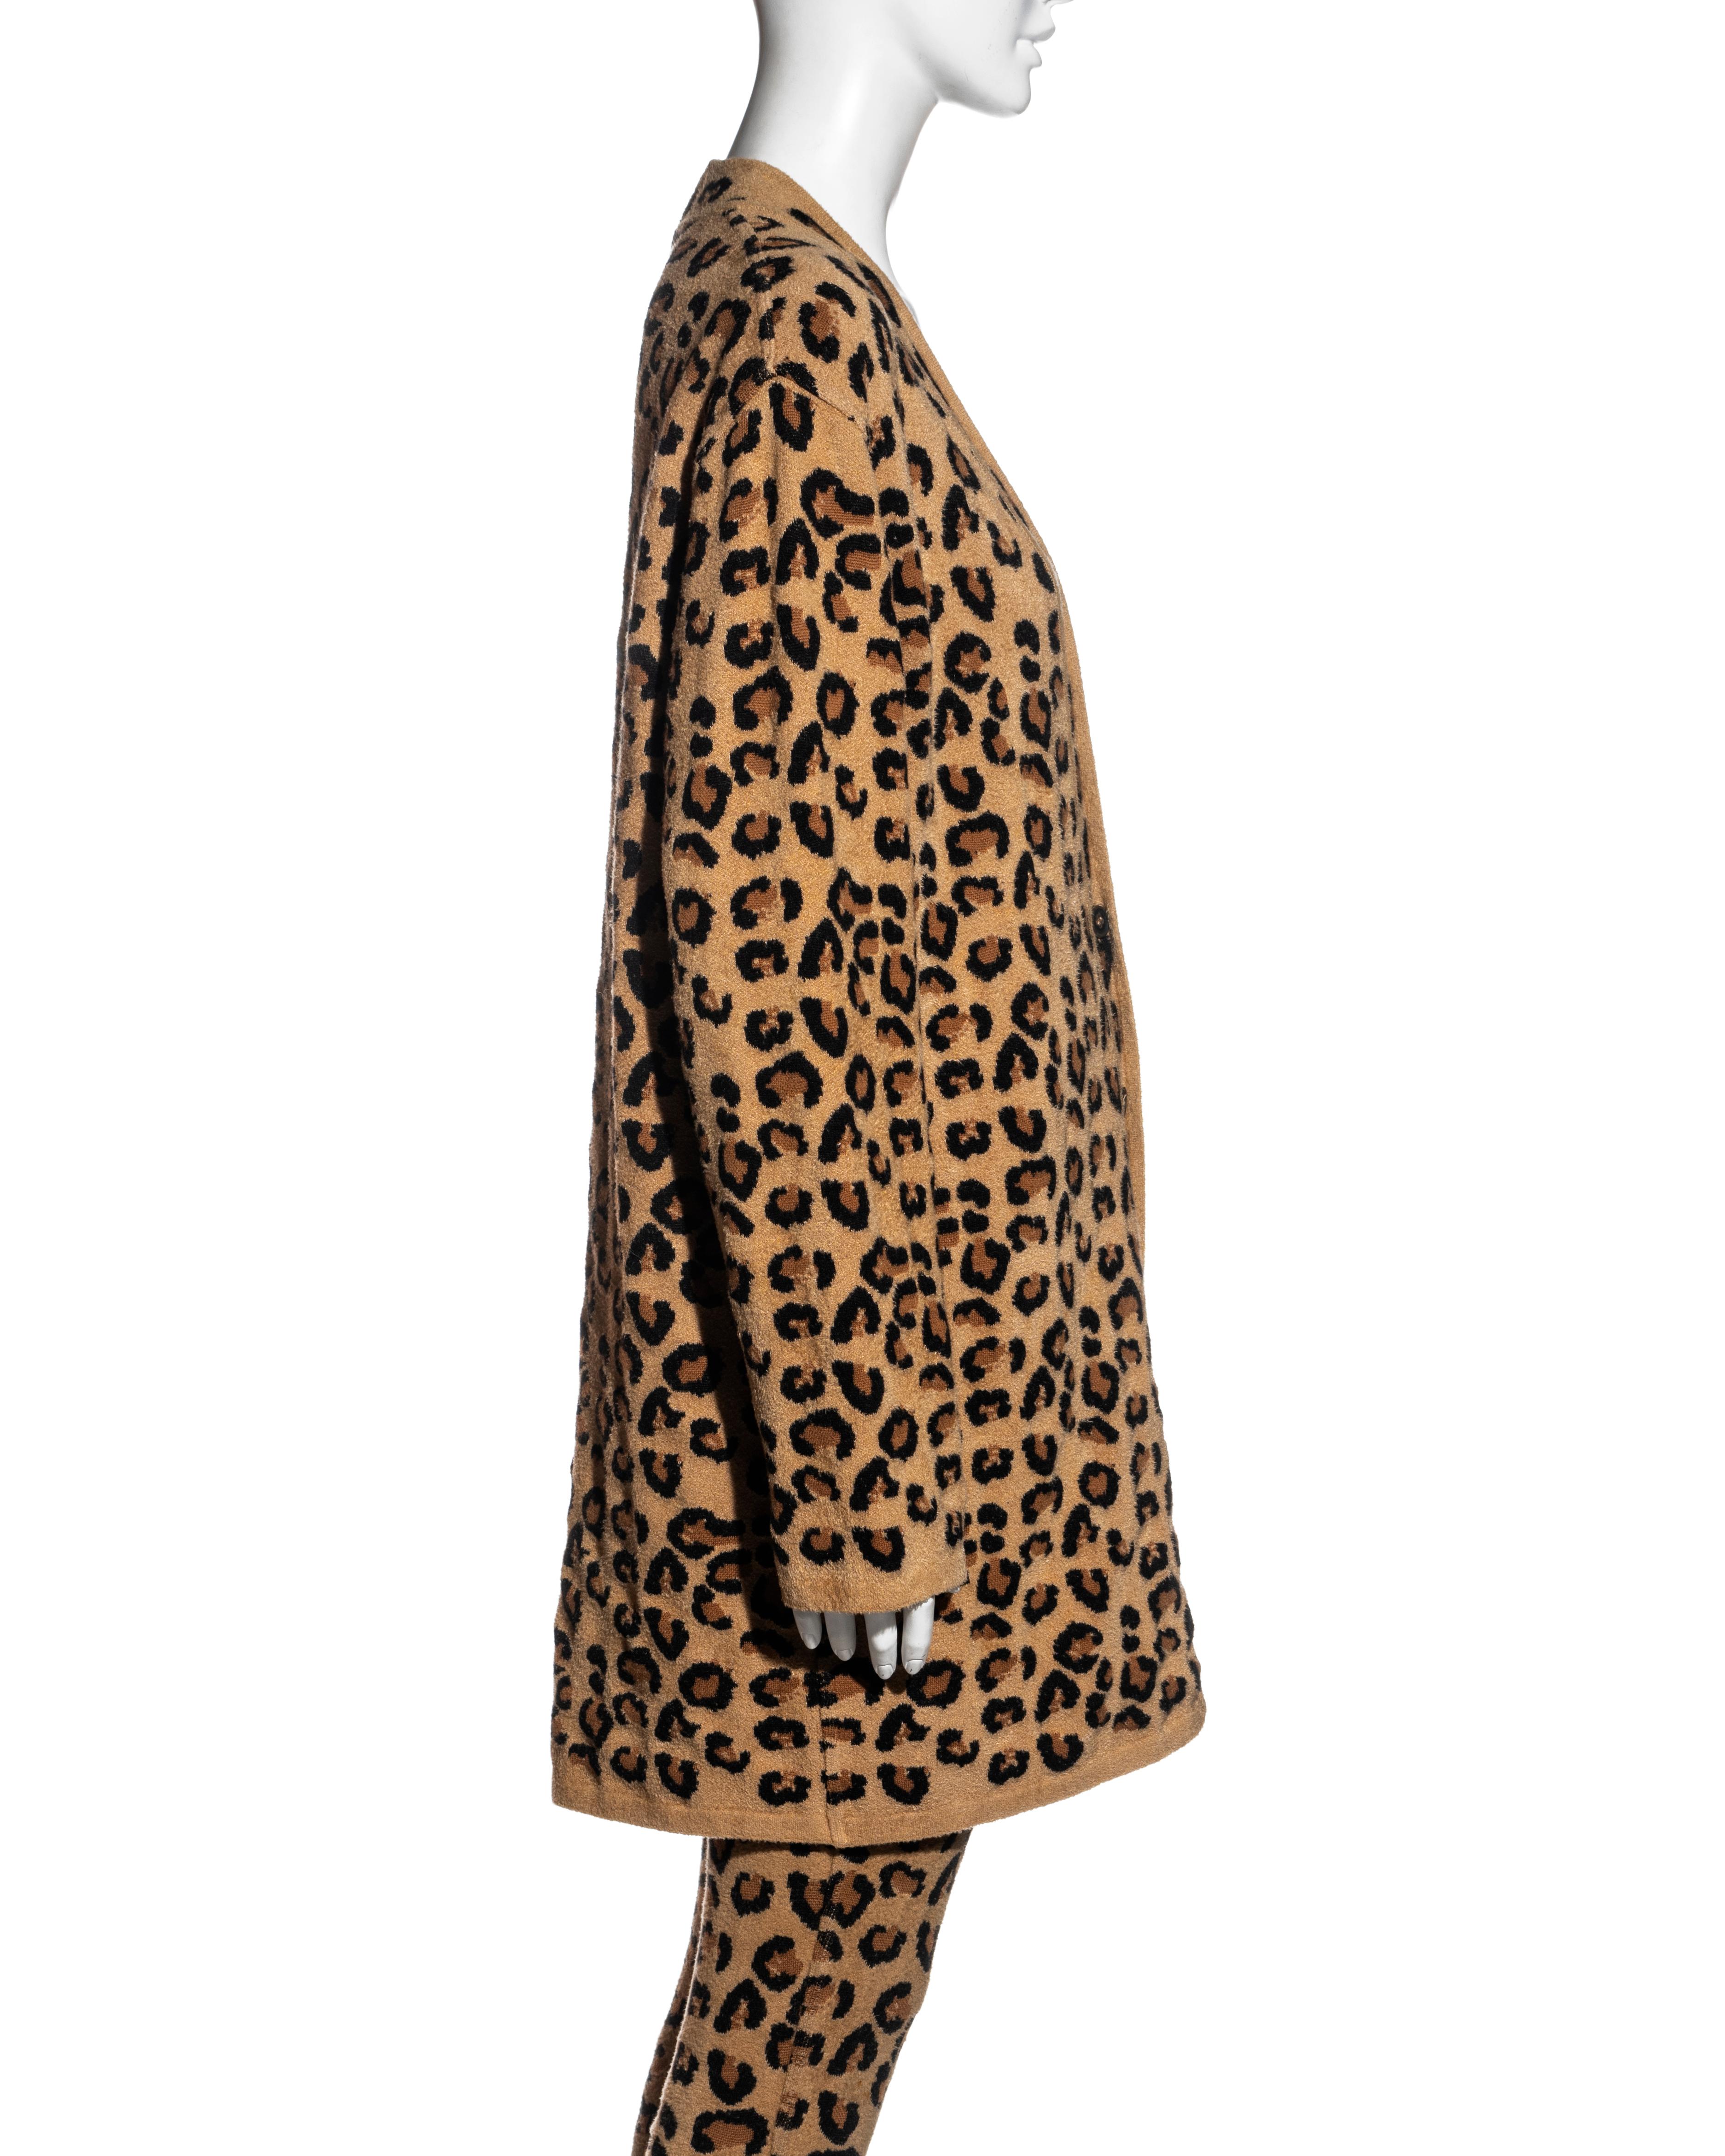 Azzedine Alaia leopard wool dress, cardigan, skirt and leggings set, fw 1991 For Sale 7